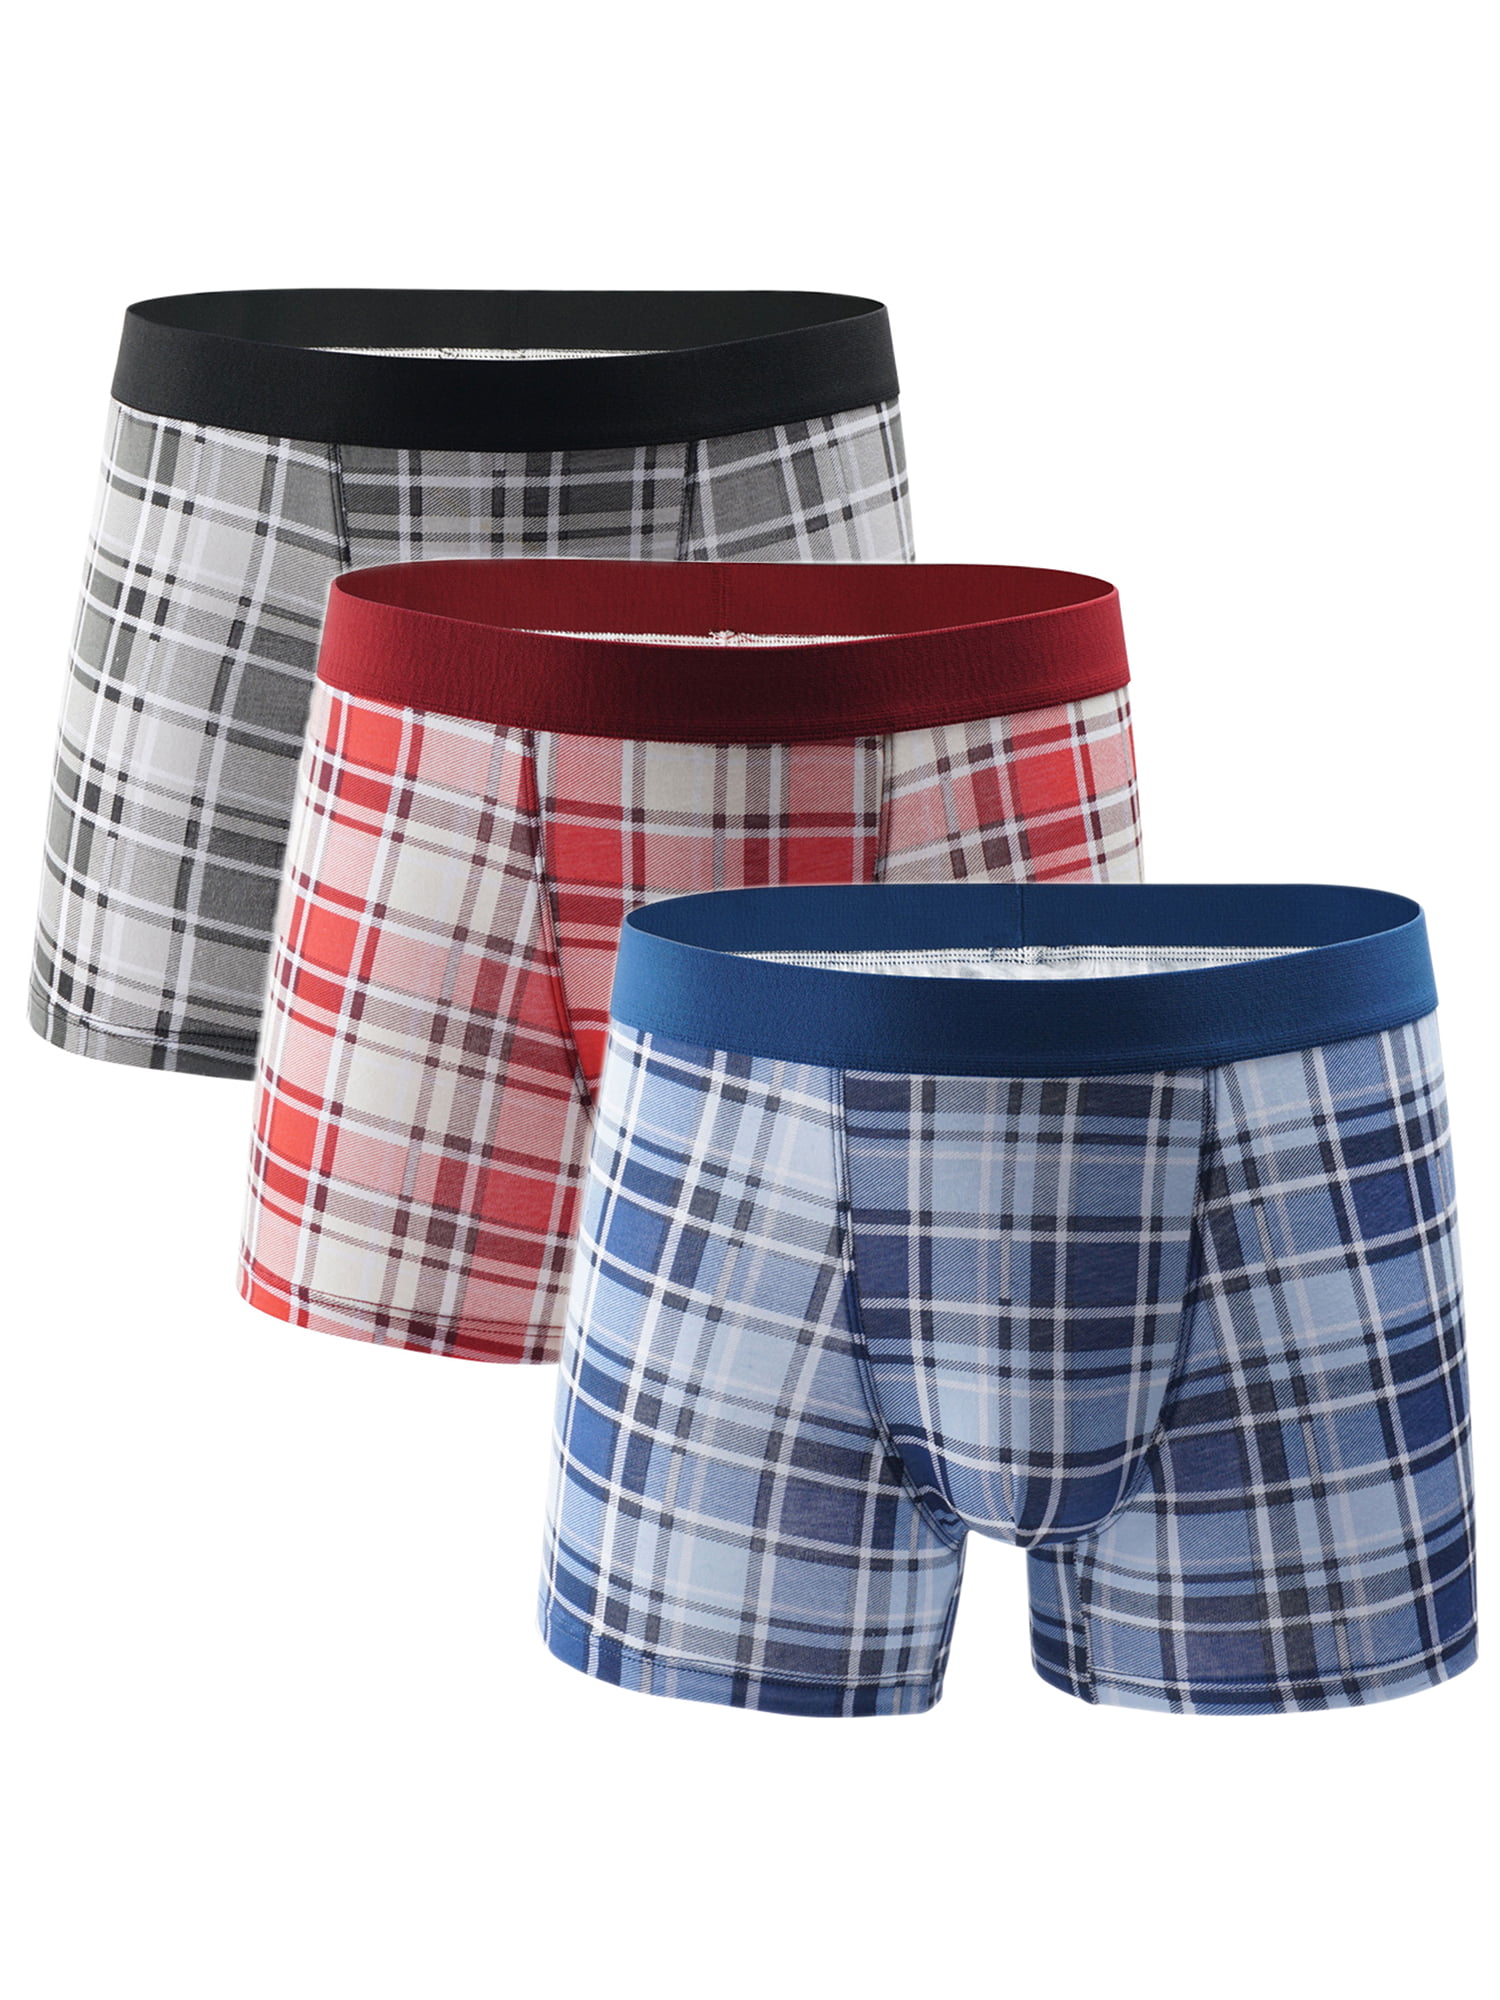 3,6 Pk Men's Woven Checked Boxer Shorts,Loose Fit Cotton Underwear S M L XL XXL 